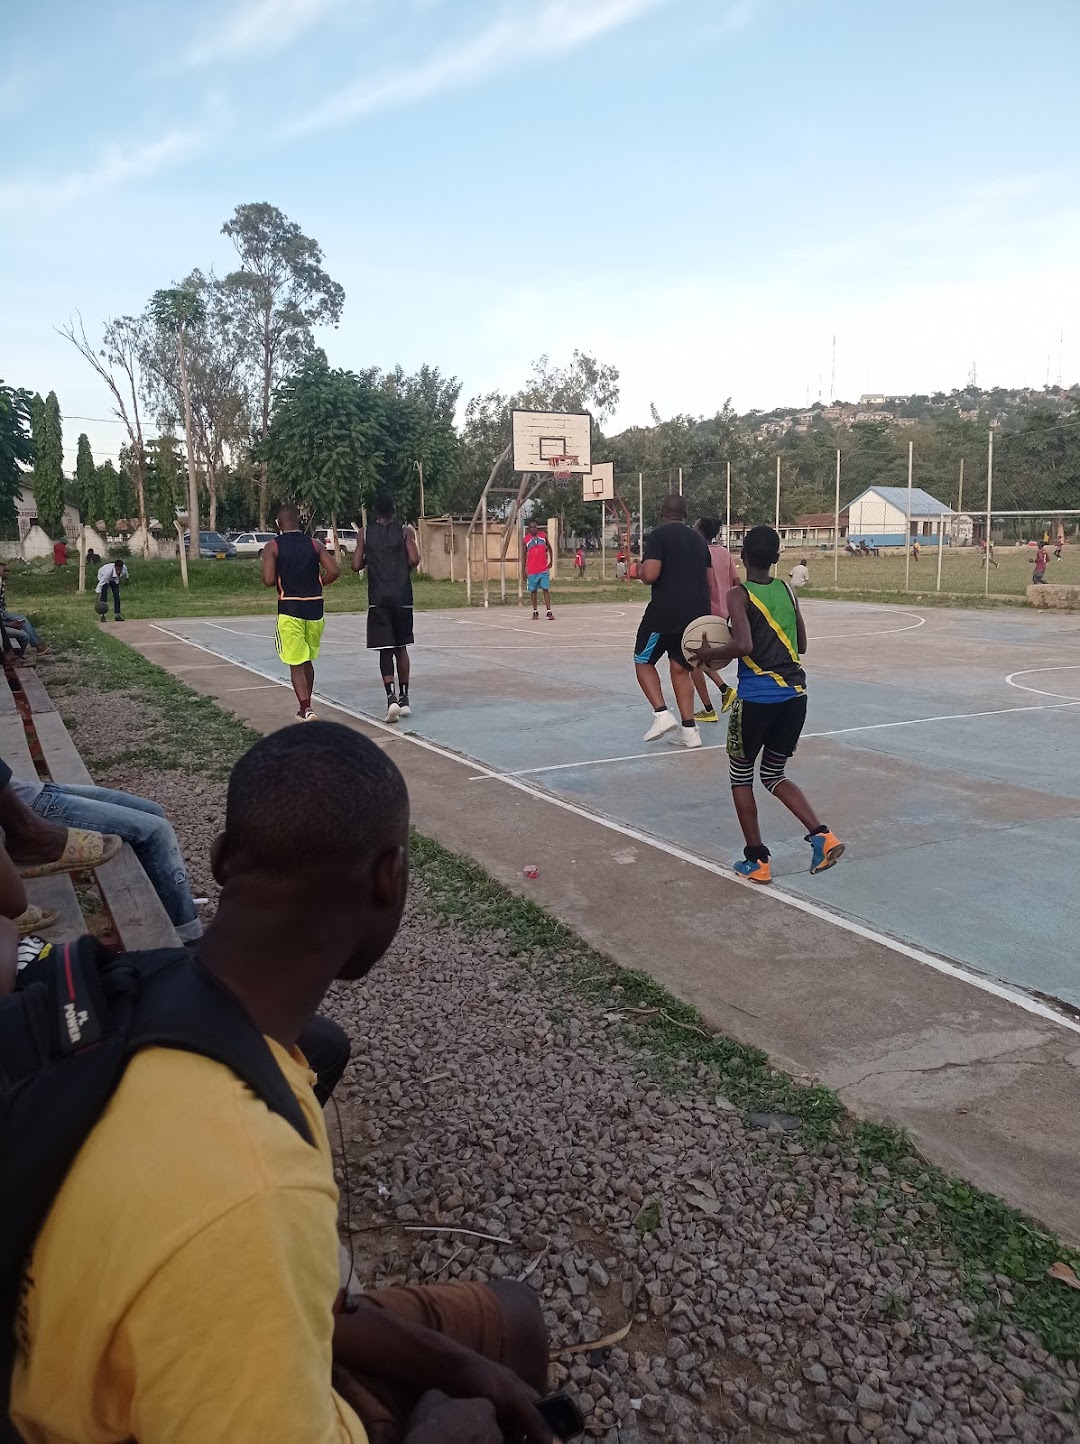 Milongo Basketball Court